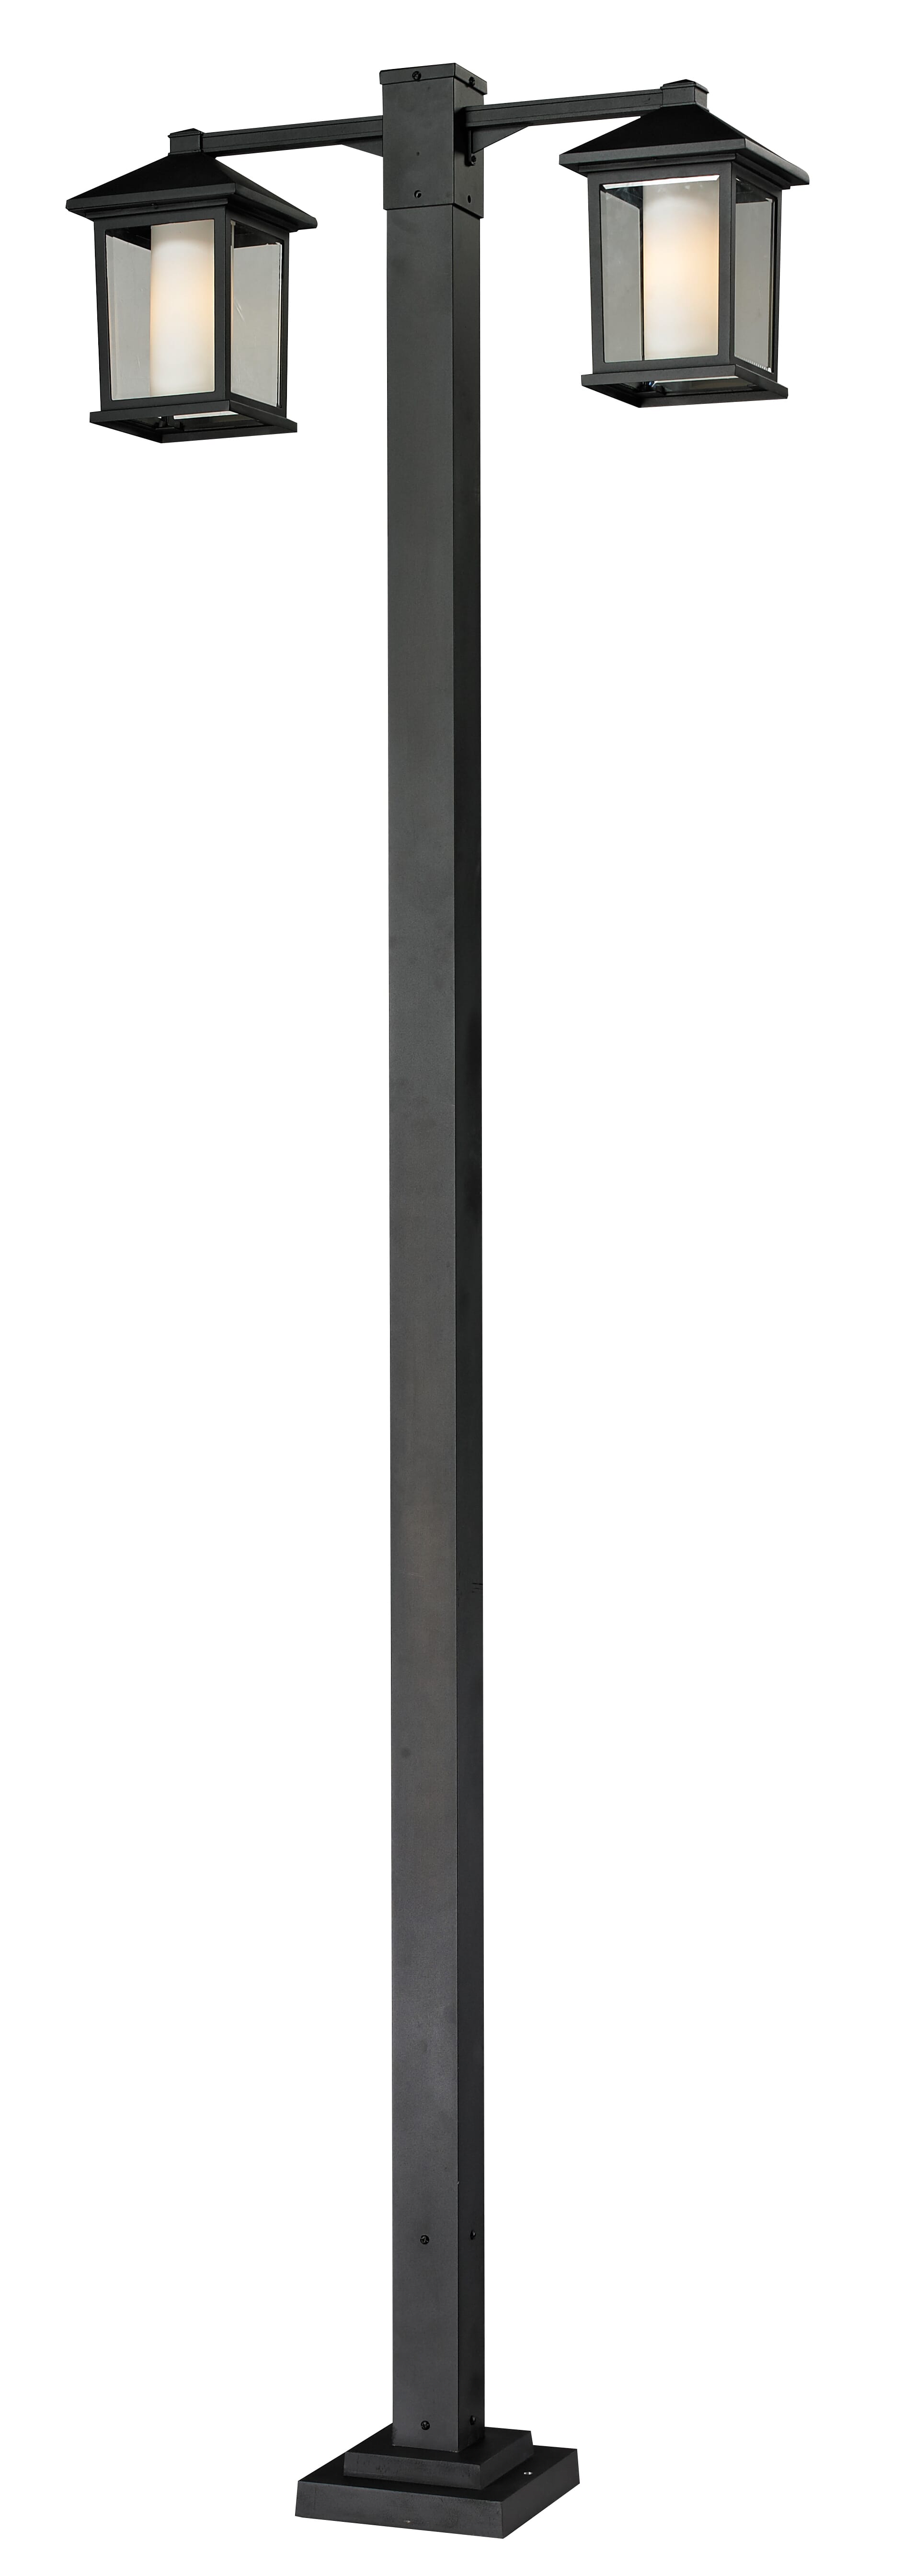 Mesa 2-Light Outdoor Post Mounted Fixture Light In Black